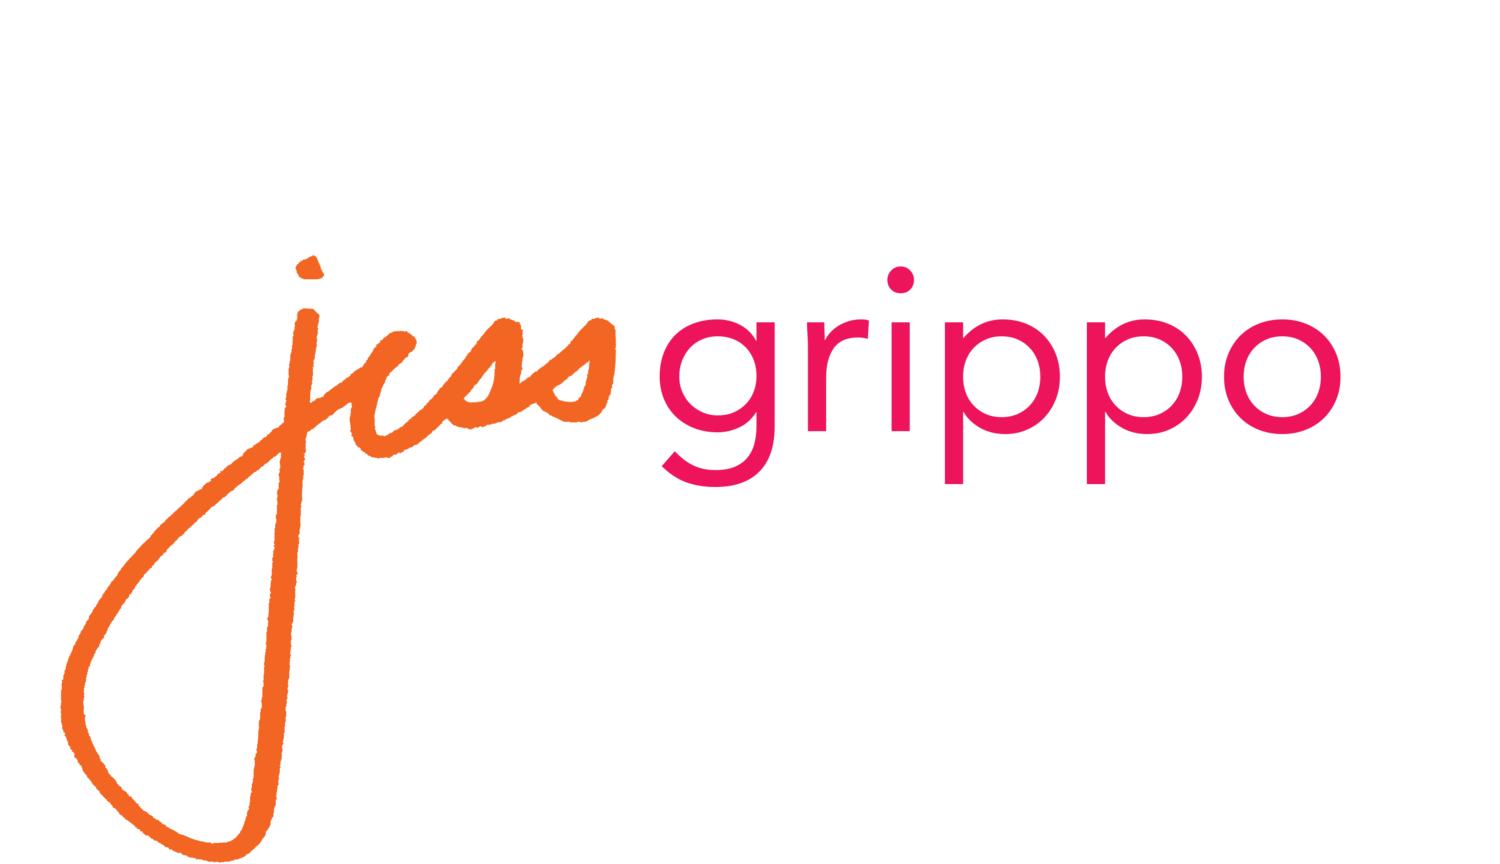 Jess Grippo-logo.png